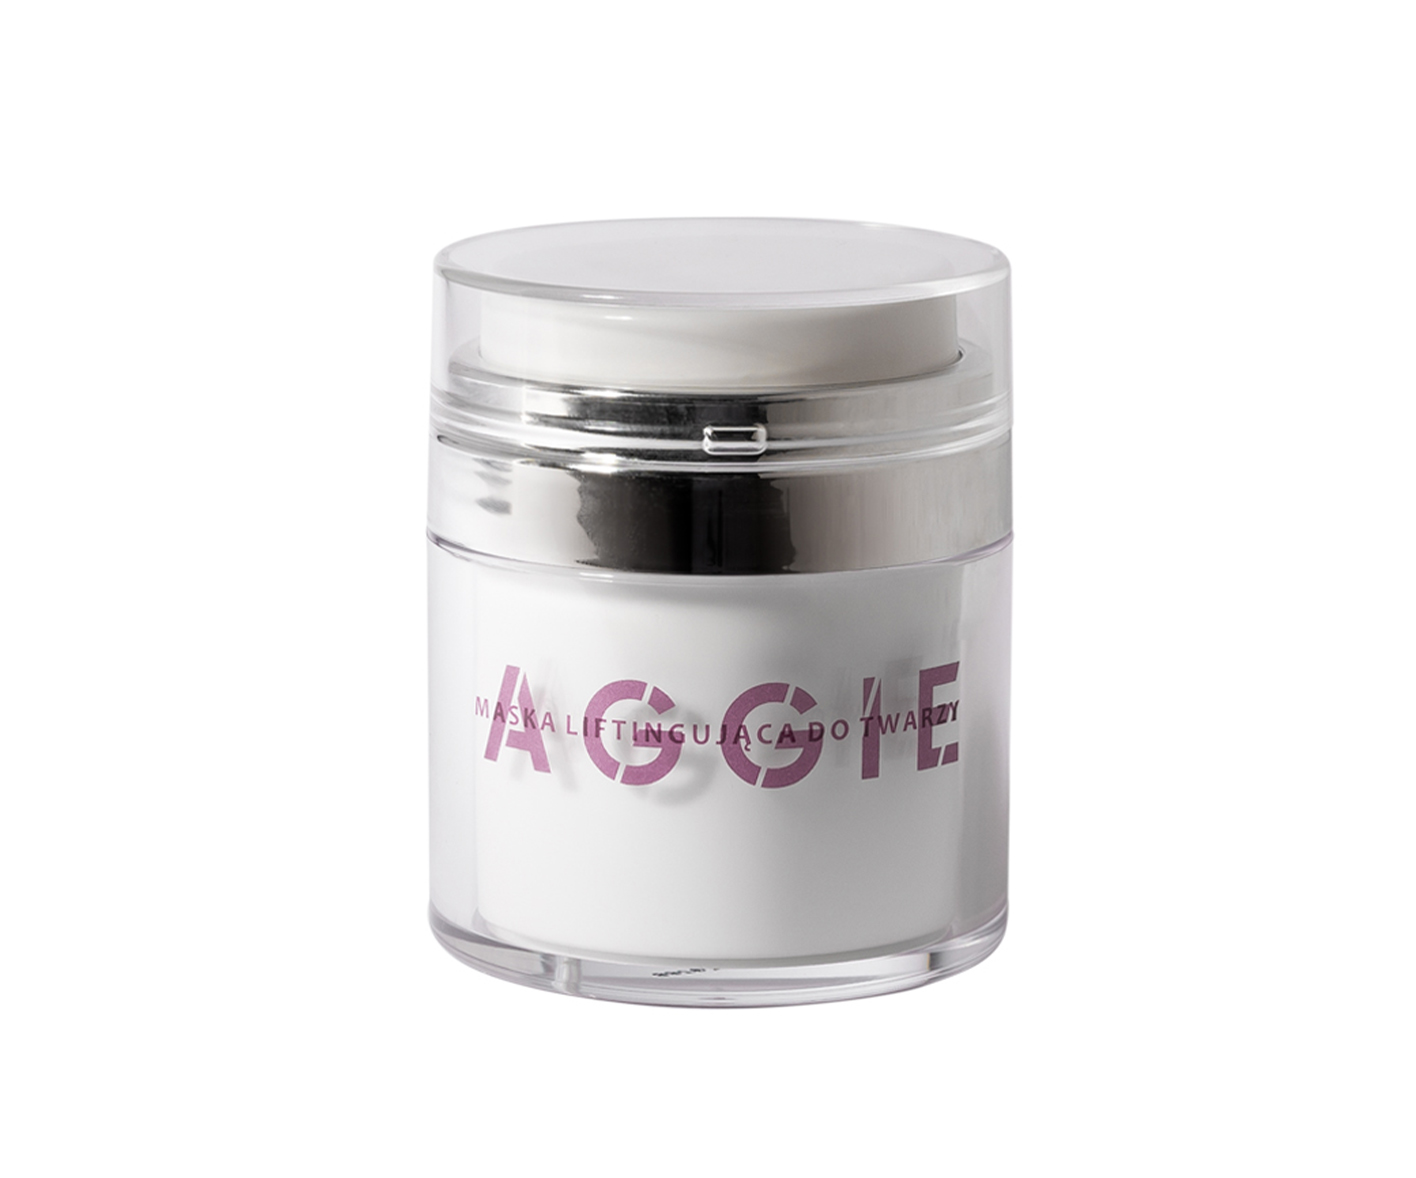 Aggie, Gesichtsmaske mit Lifting-Effekt